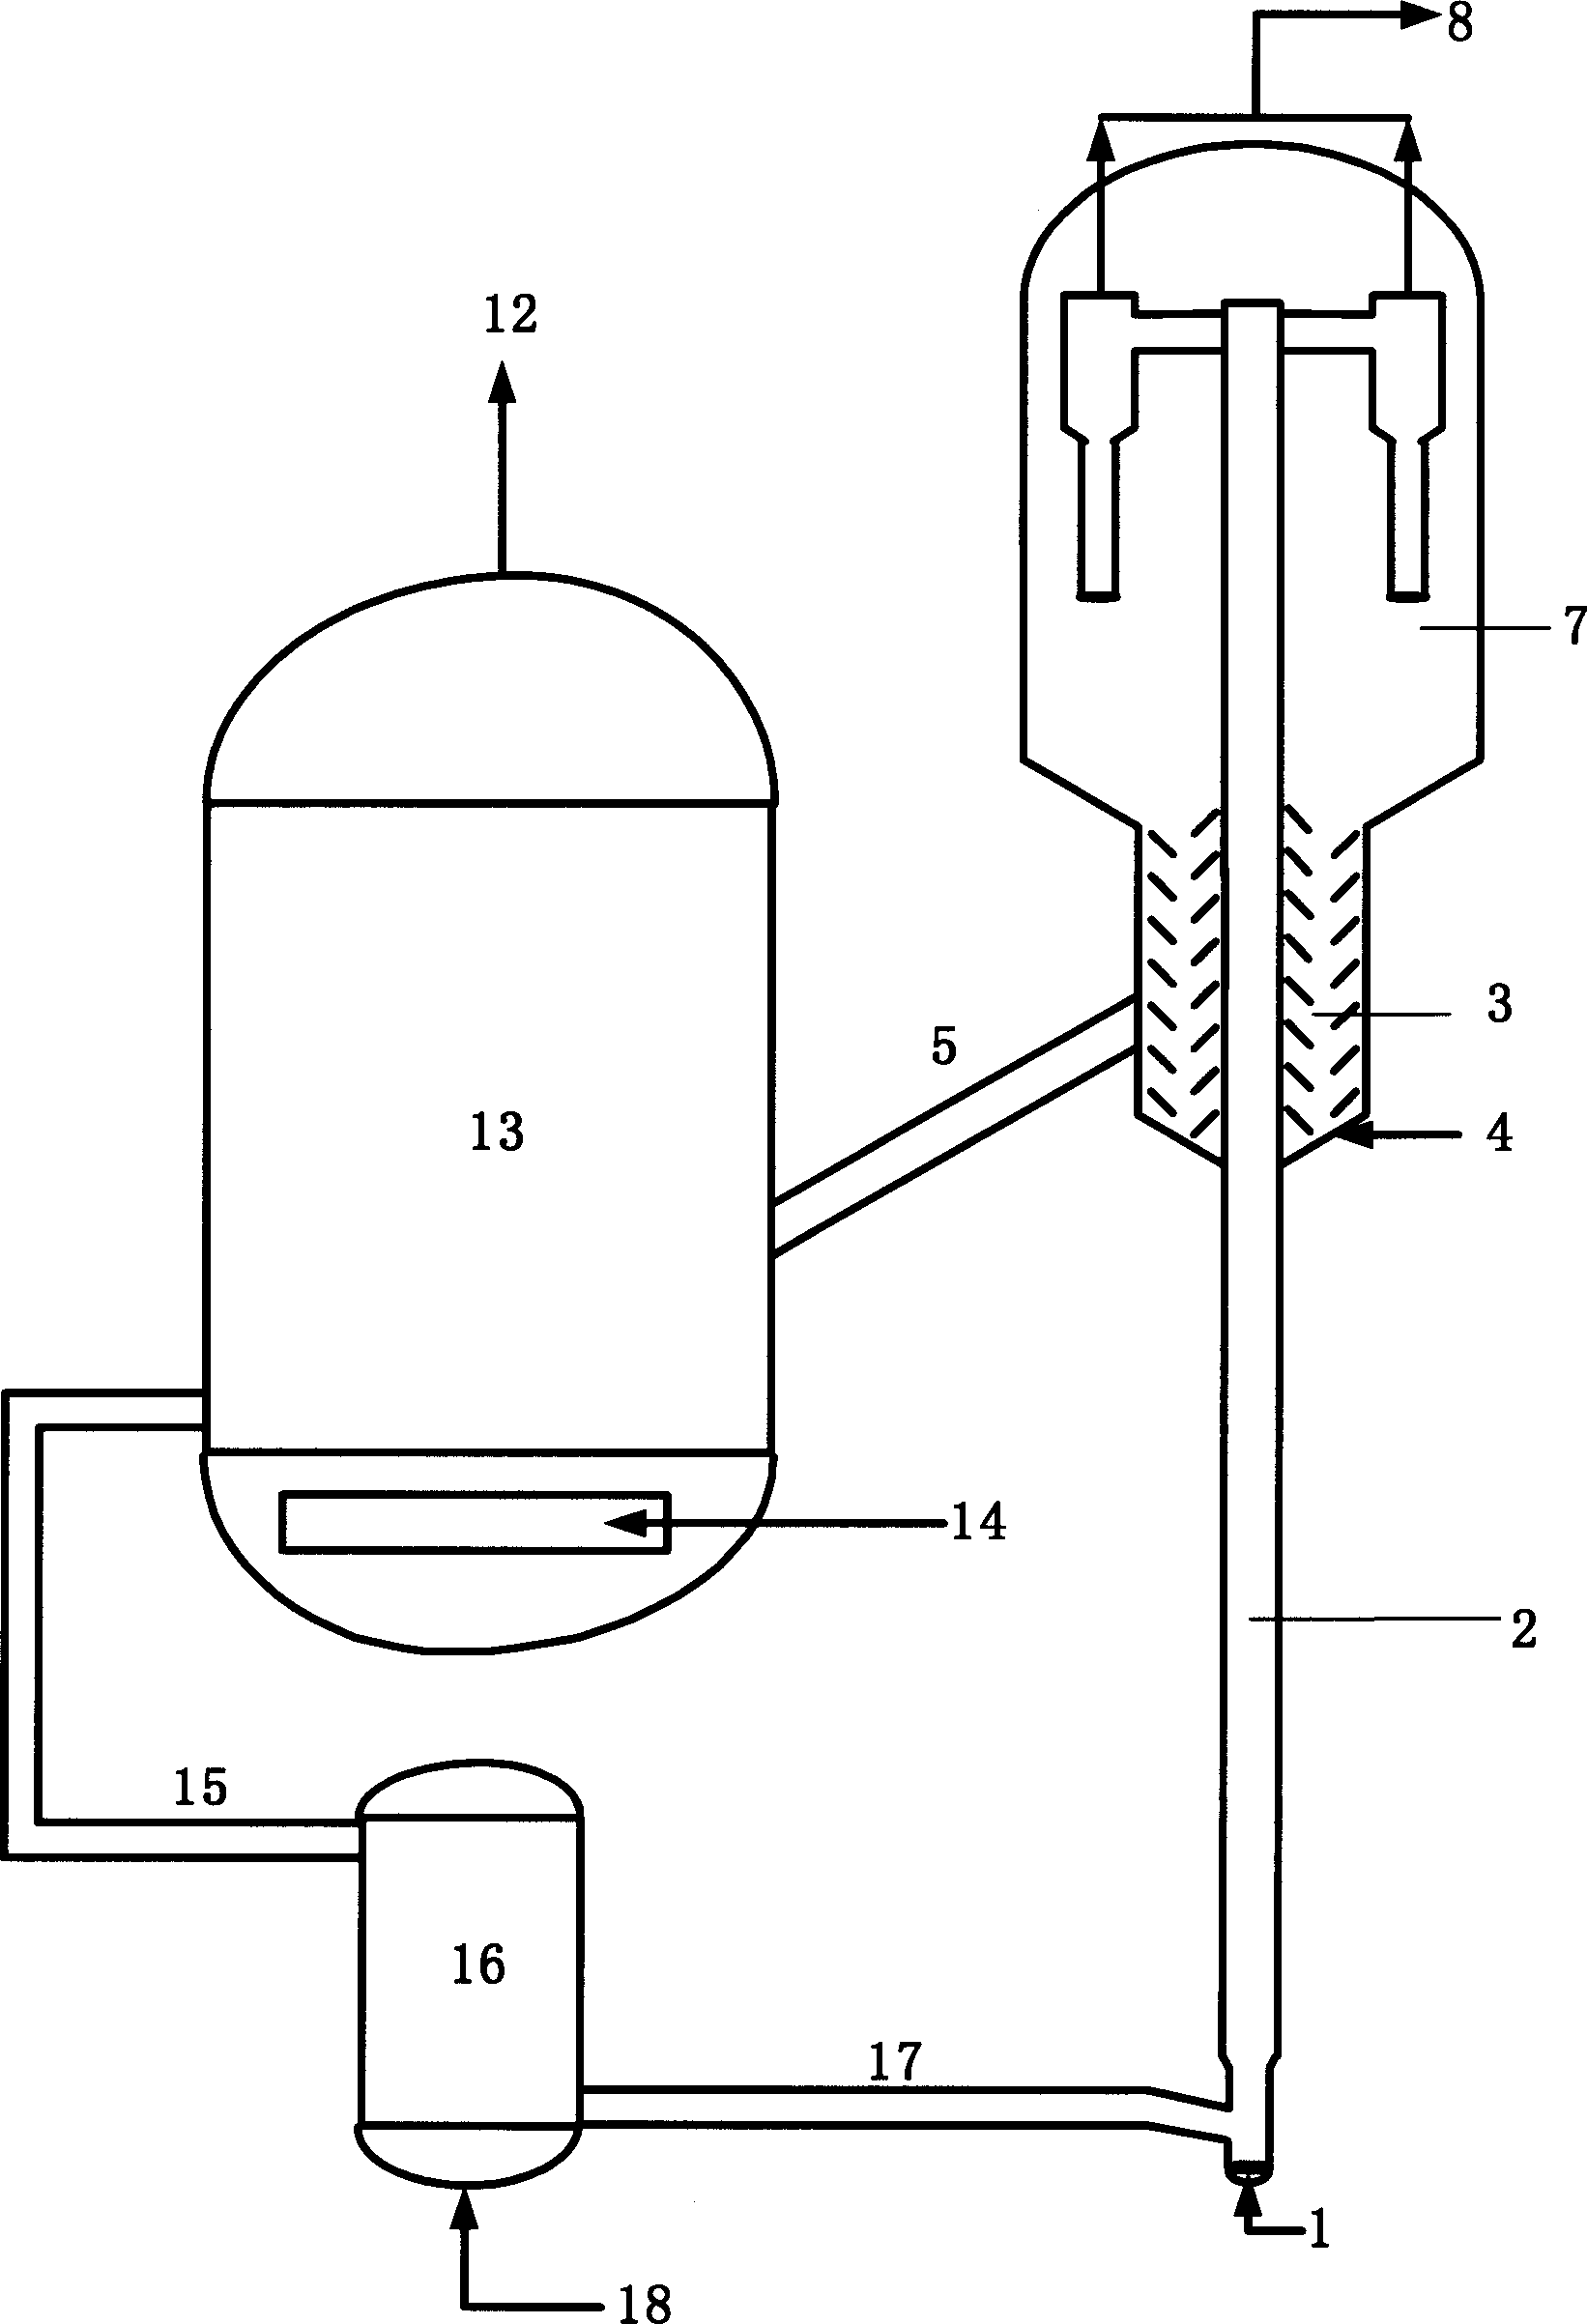 Method for decreasing sulfur content of hydrocarbon